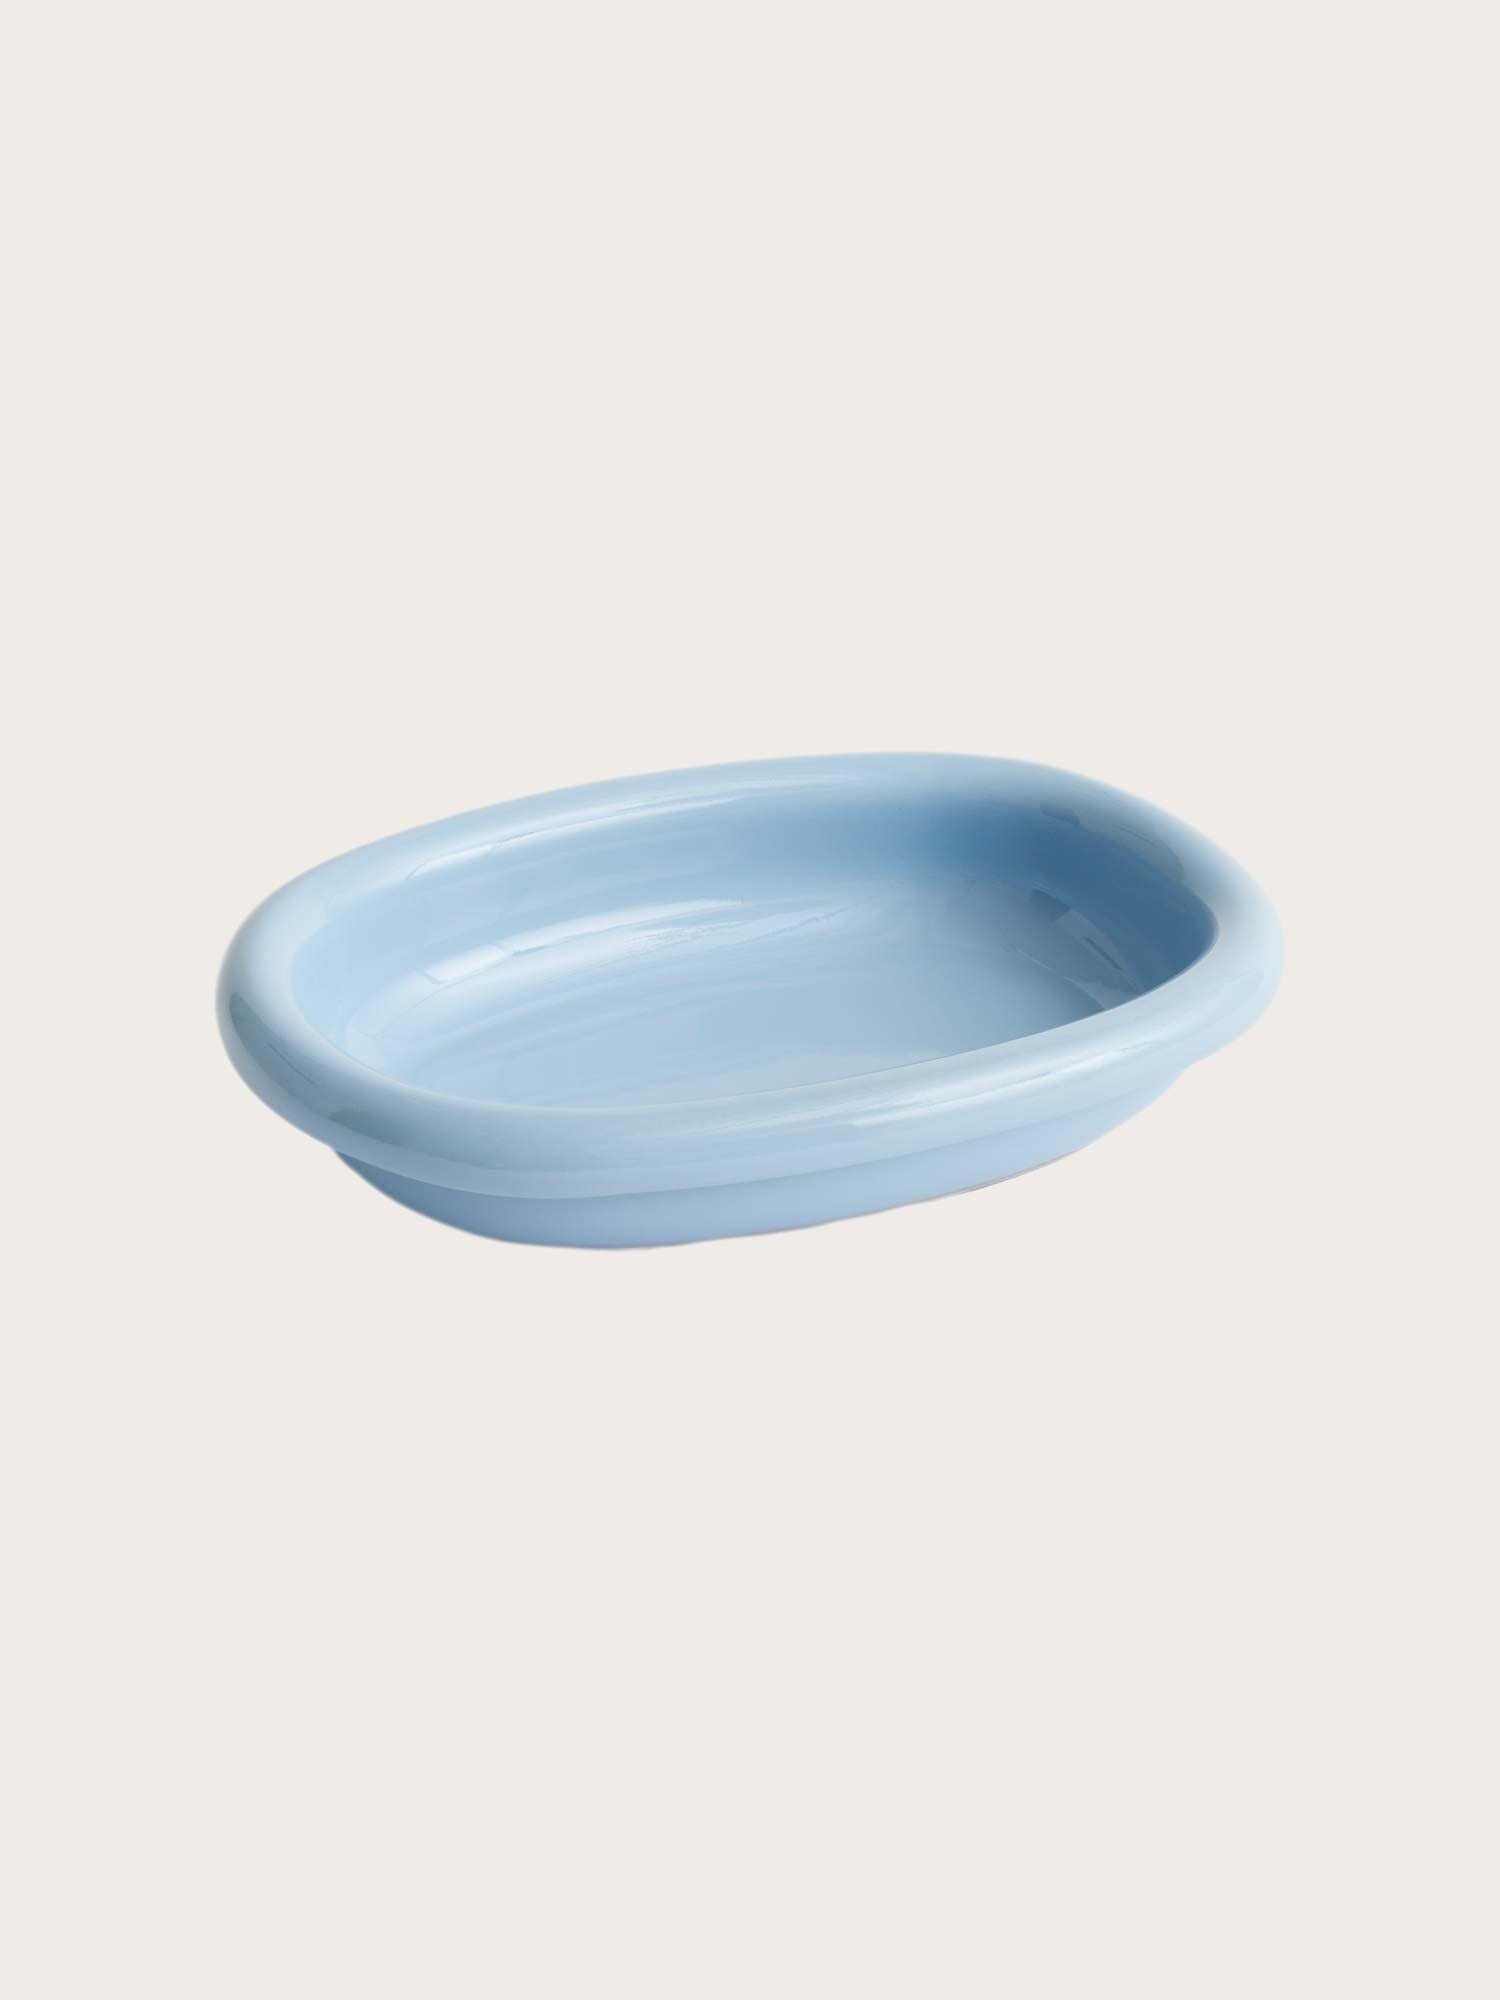 Barro Oval Dish Small - Light Blue